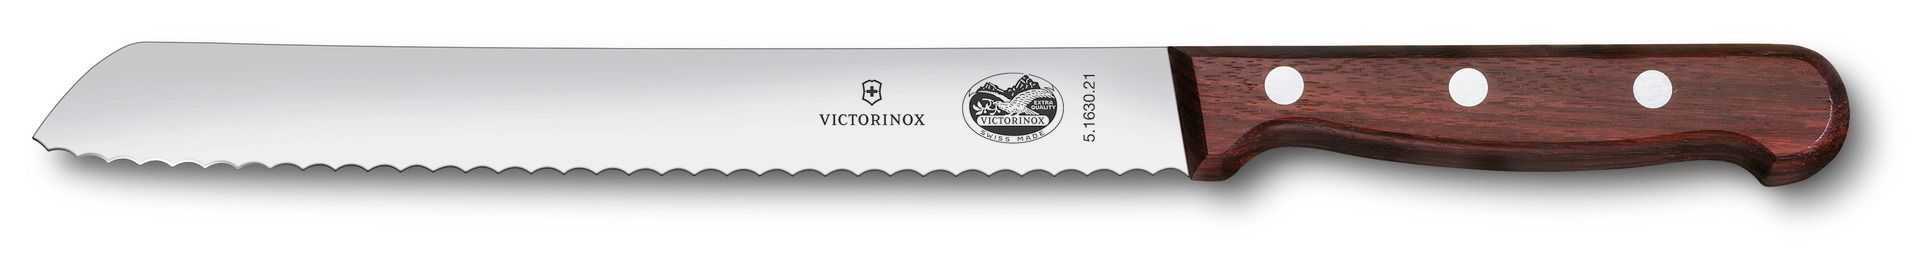 Victorinox Brot-/Konditormesser